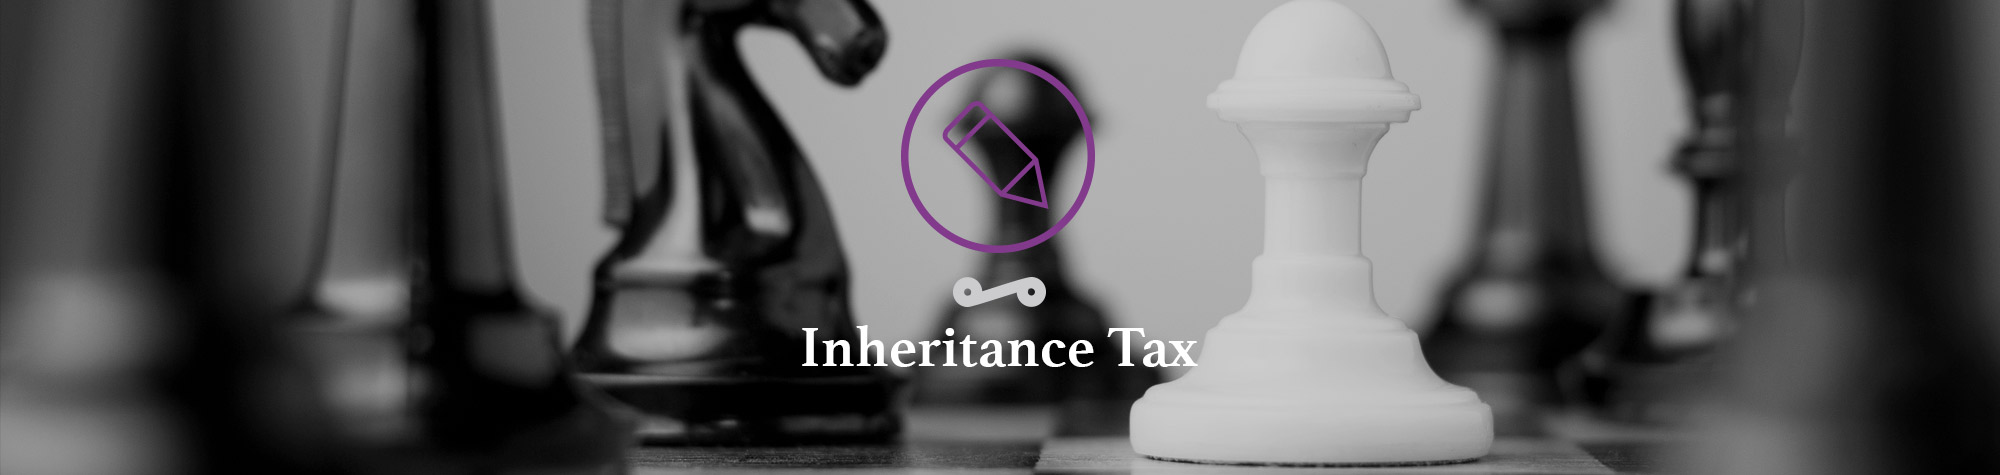 Uk inheritance tax rules